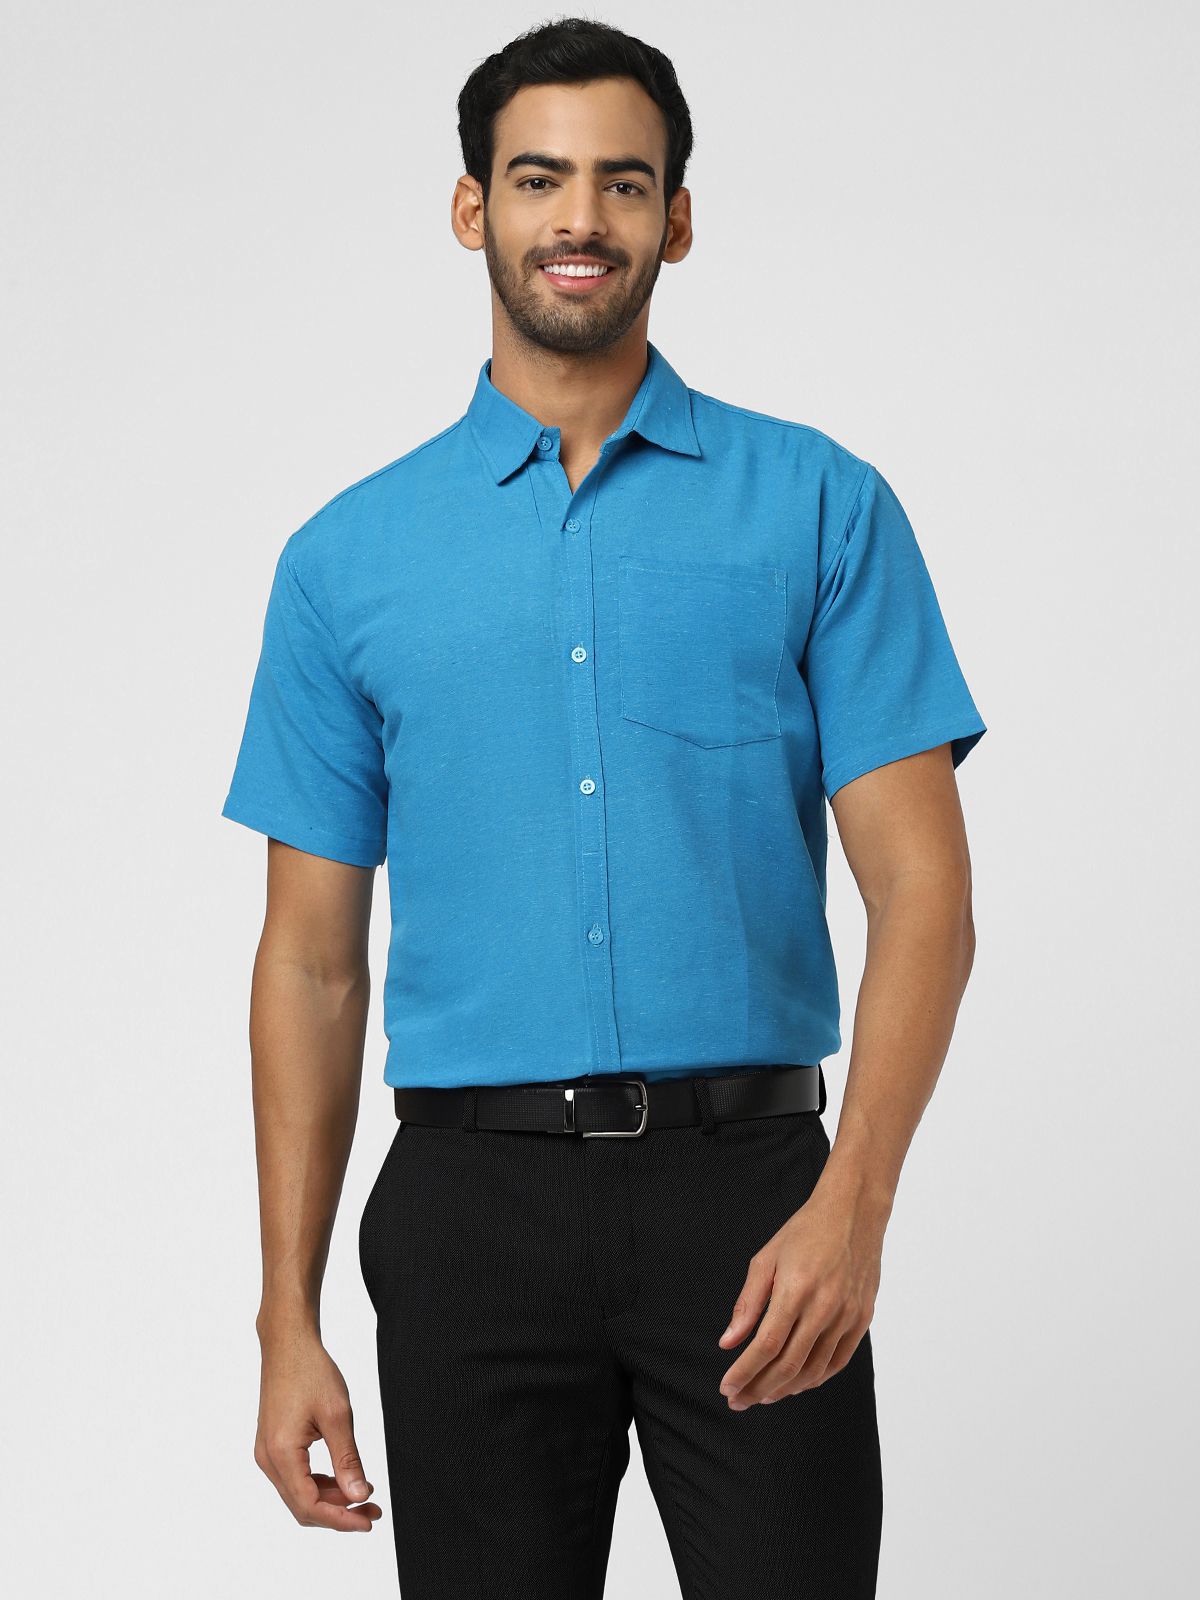     			DESHBANDHU DBK - Blue Cotton Regular Fit Men's Casual Shirt ( Pack of 1 )